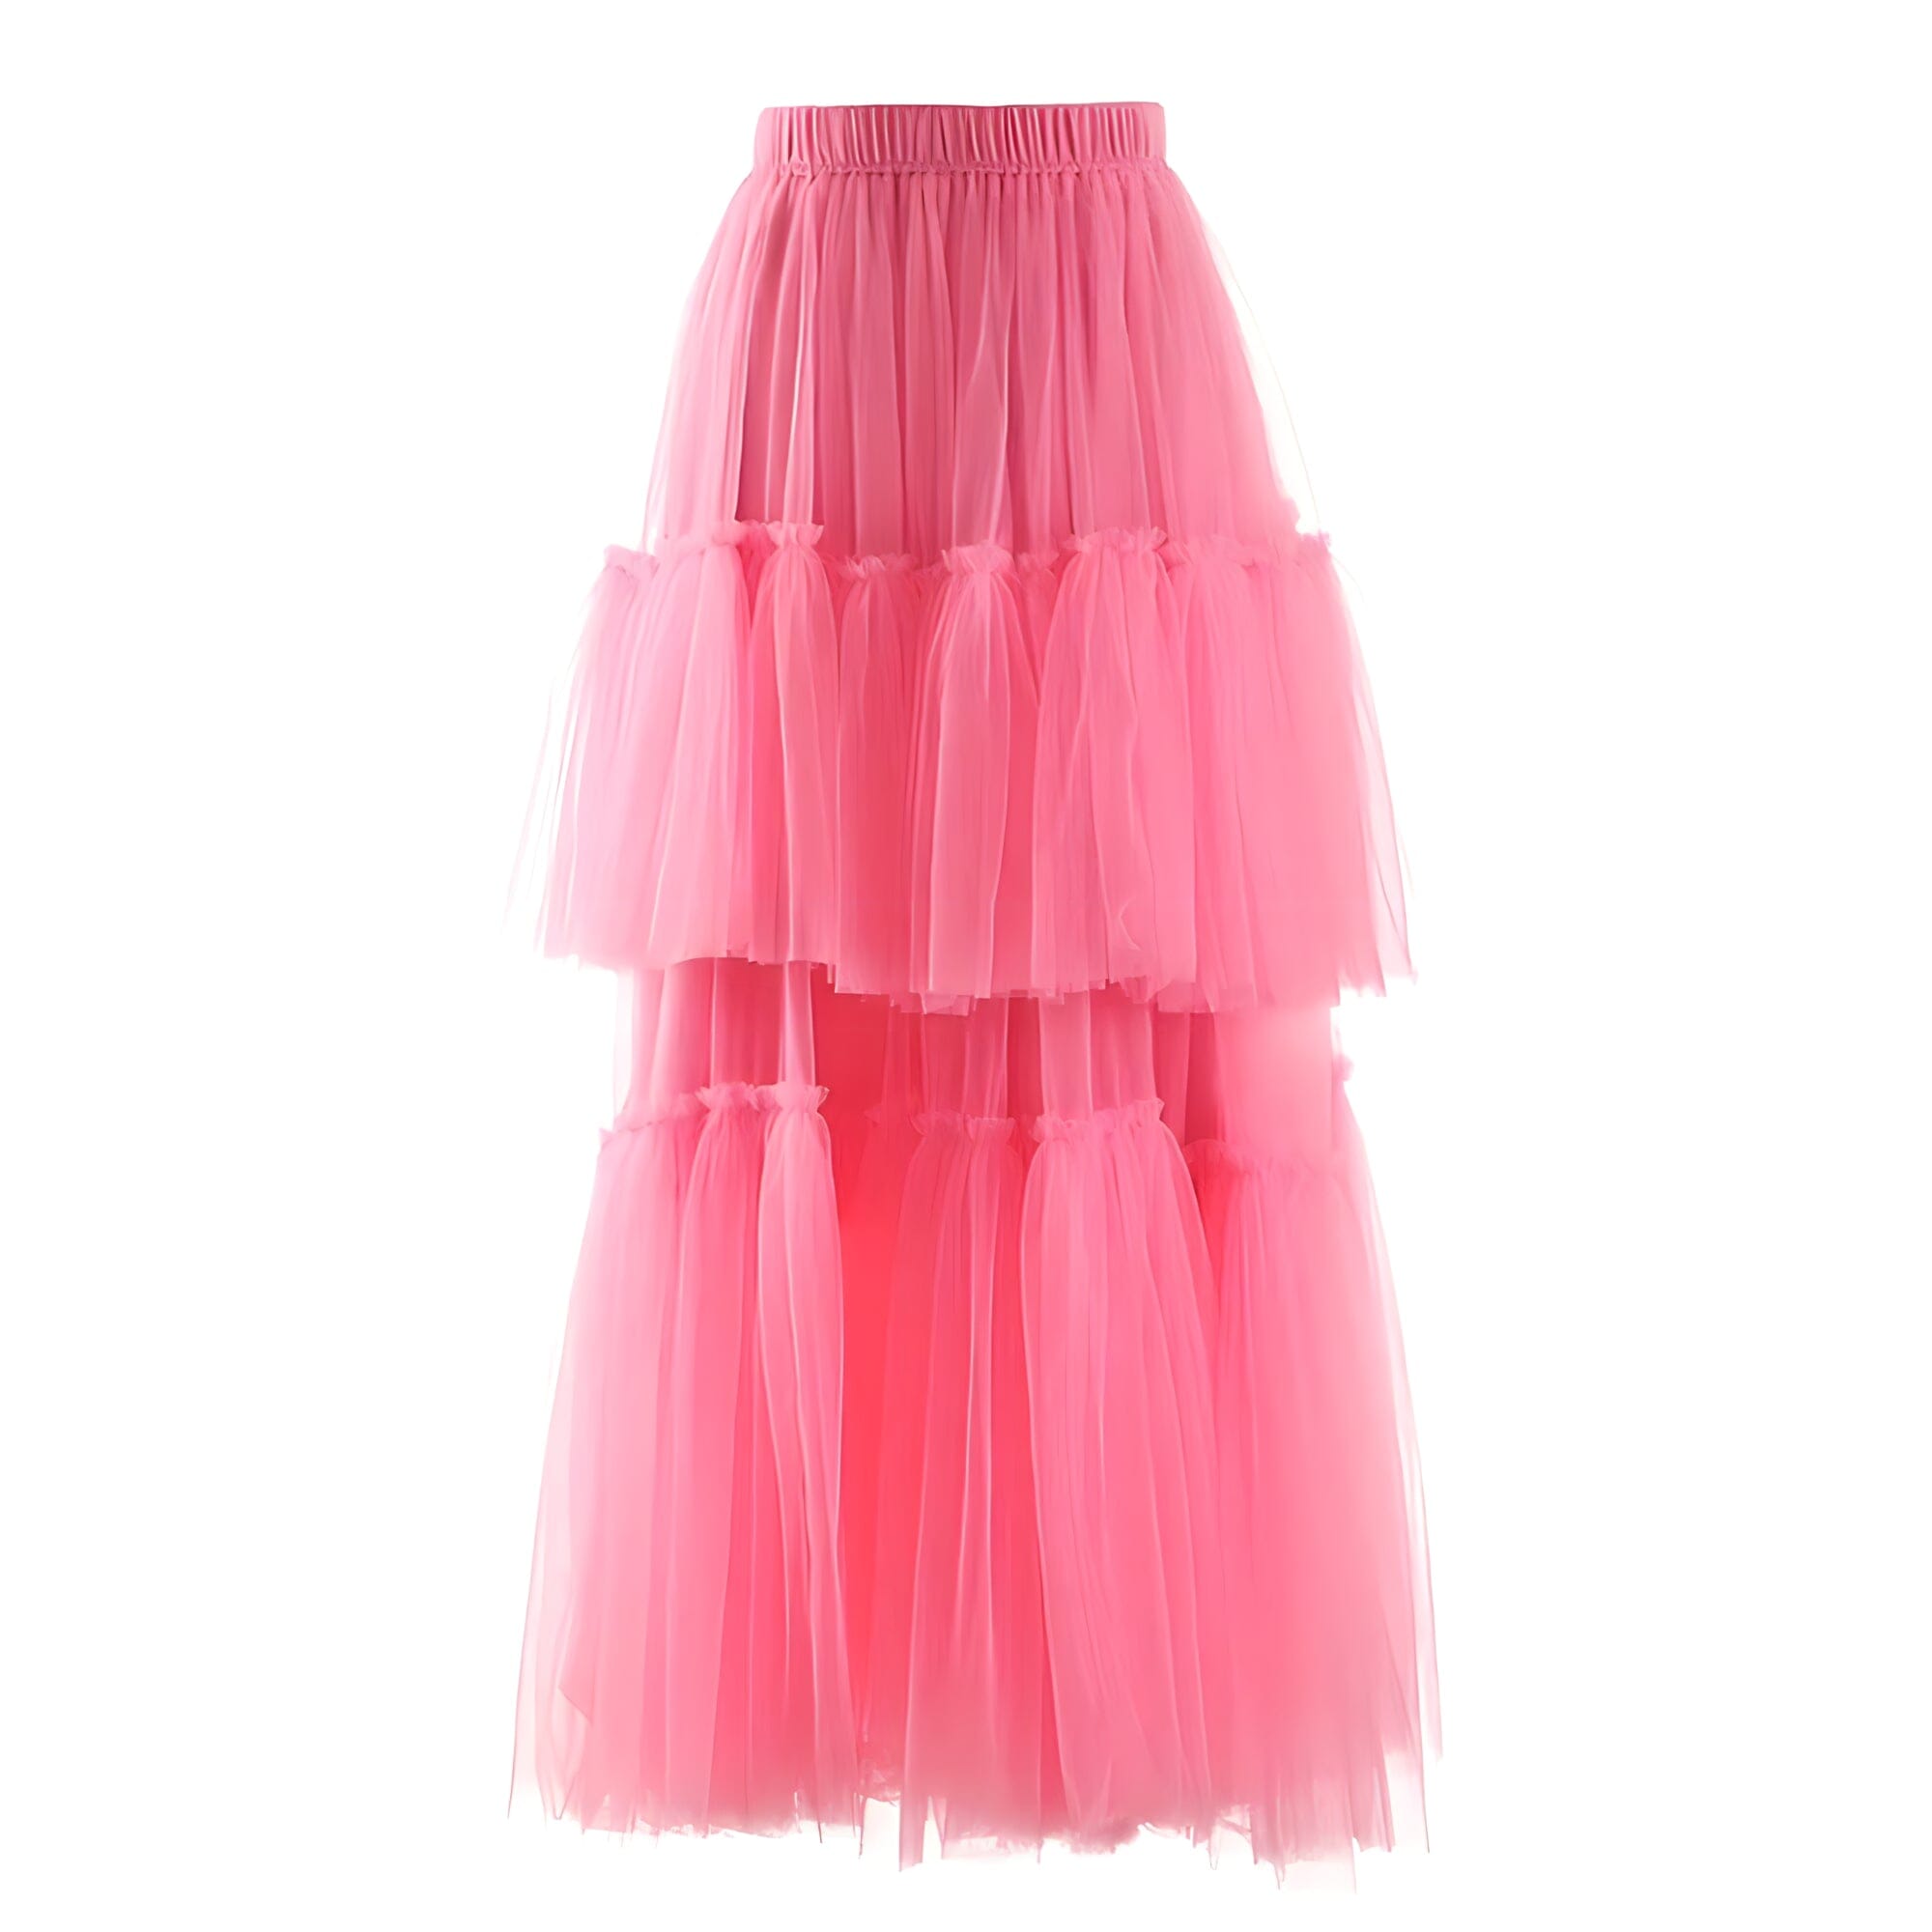 The Rhapsody High Waist Skirt - Multiple Colors 0 SA Styles Pink S 